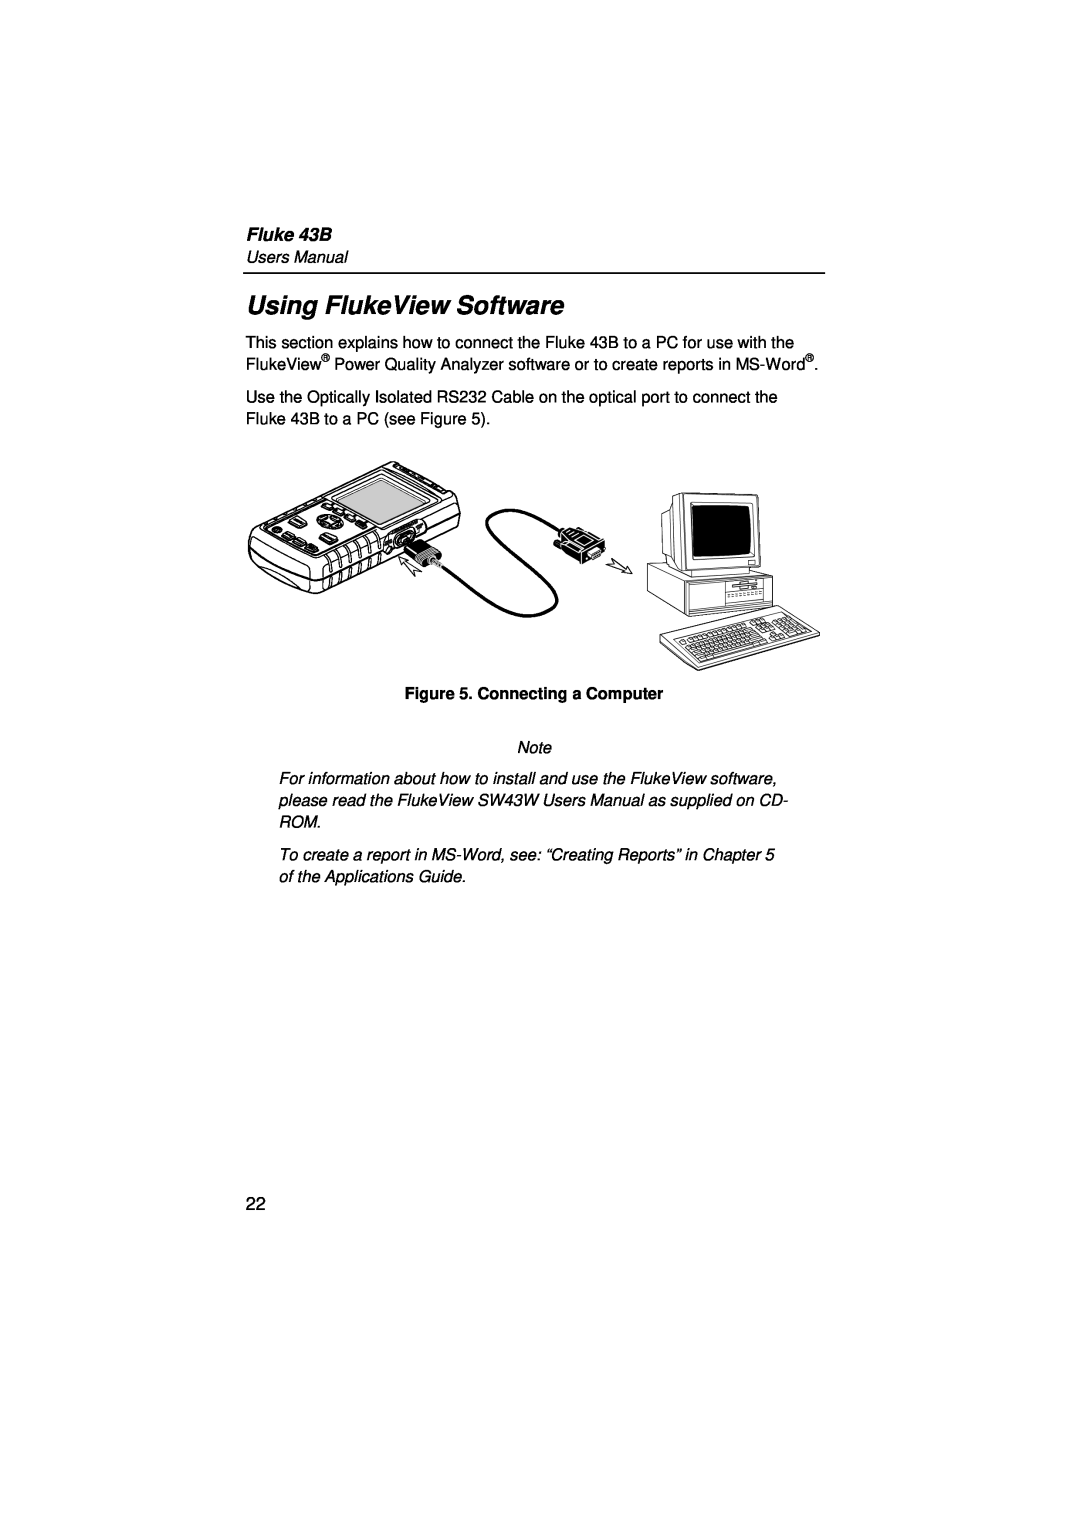 Fluke user manual Using FlukeView Software, Fluke 43B, Connecting a Computer 